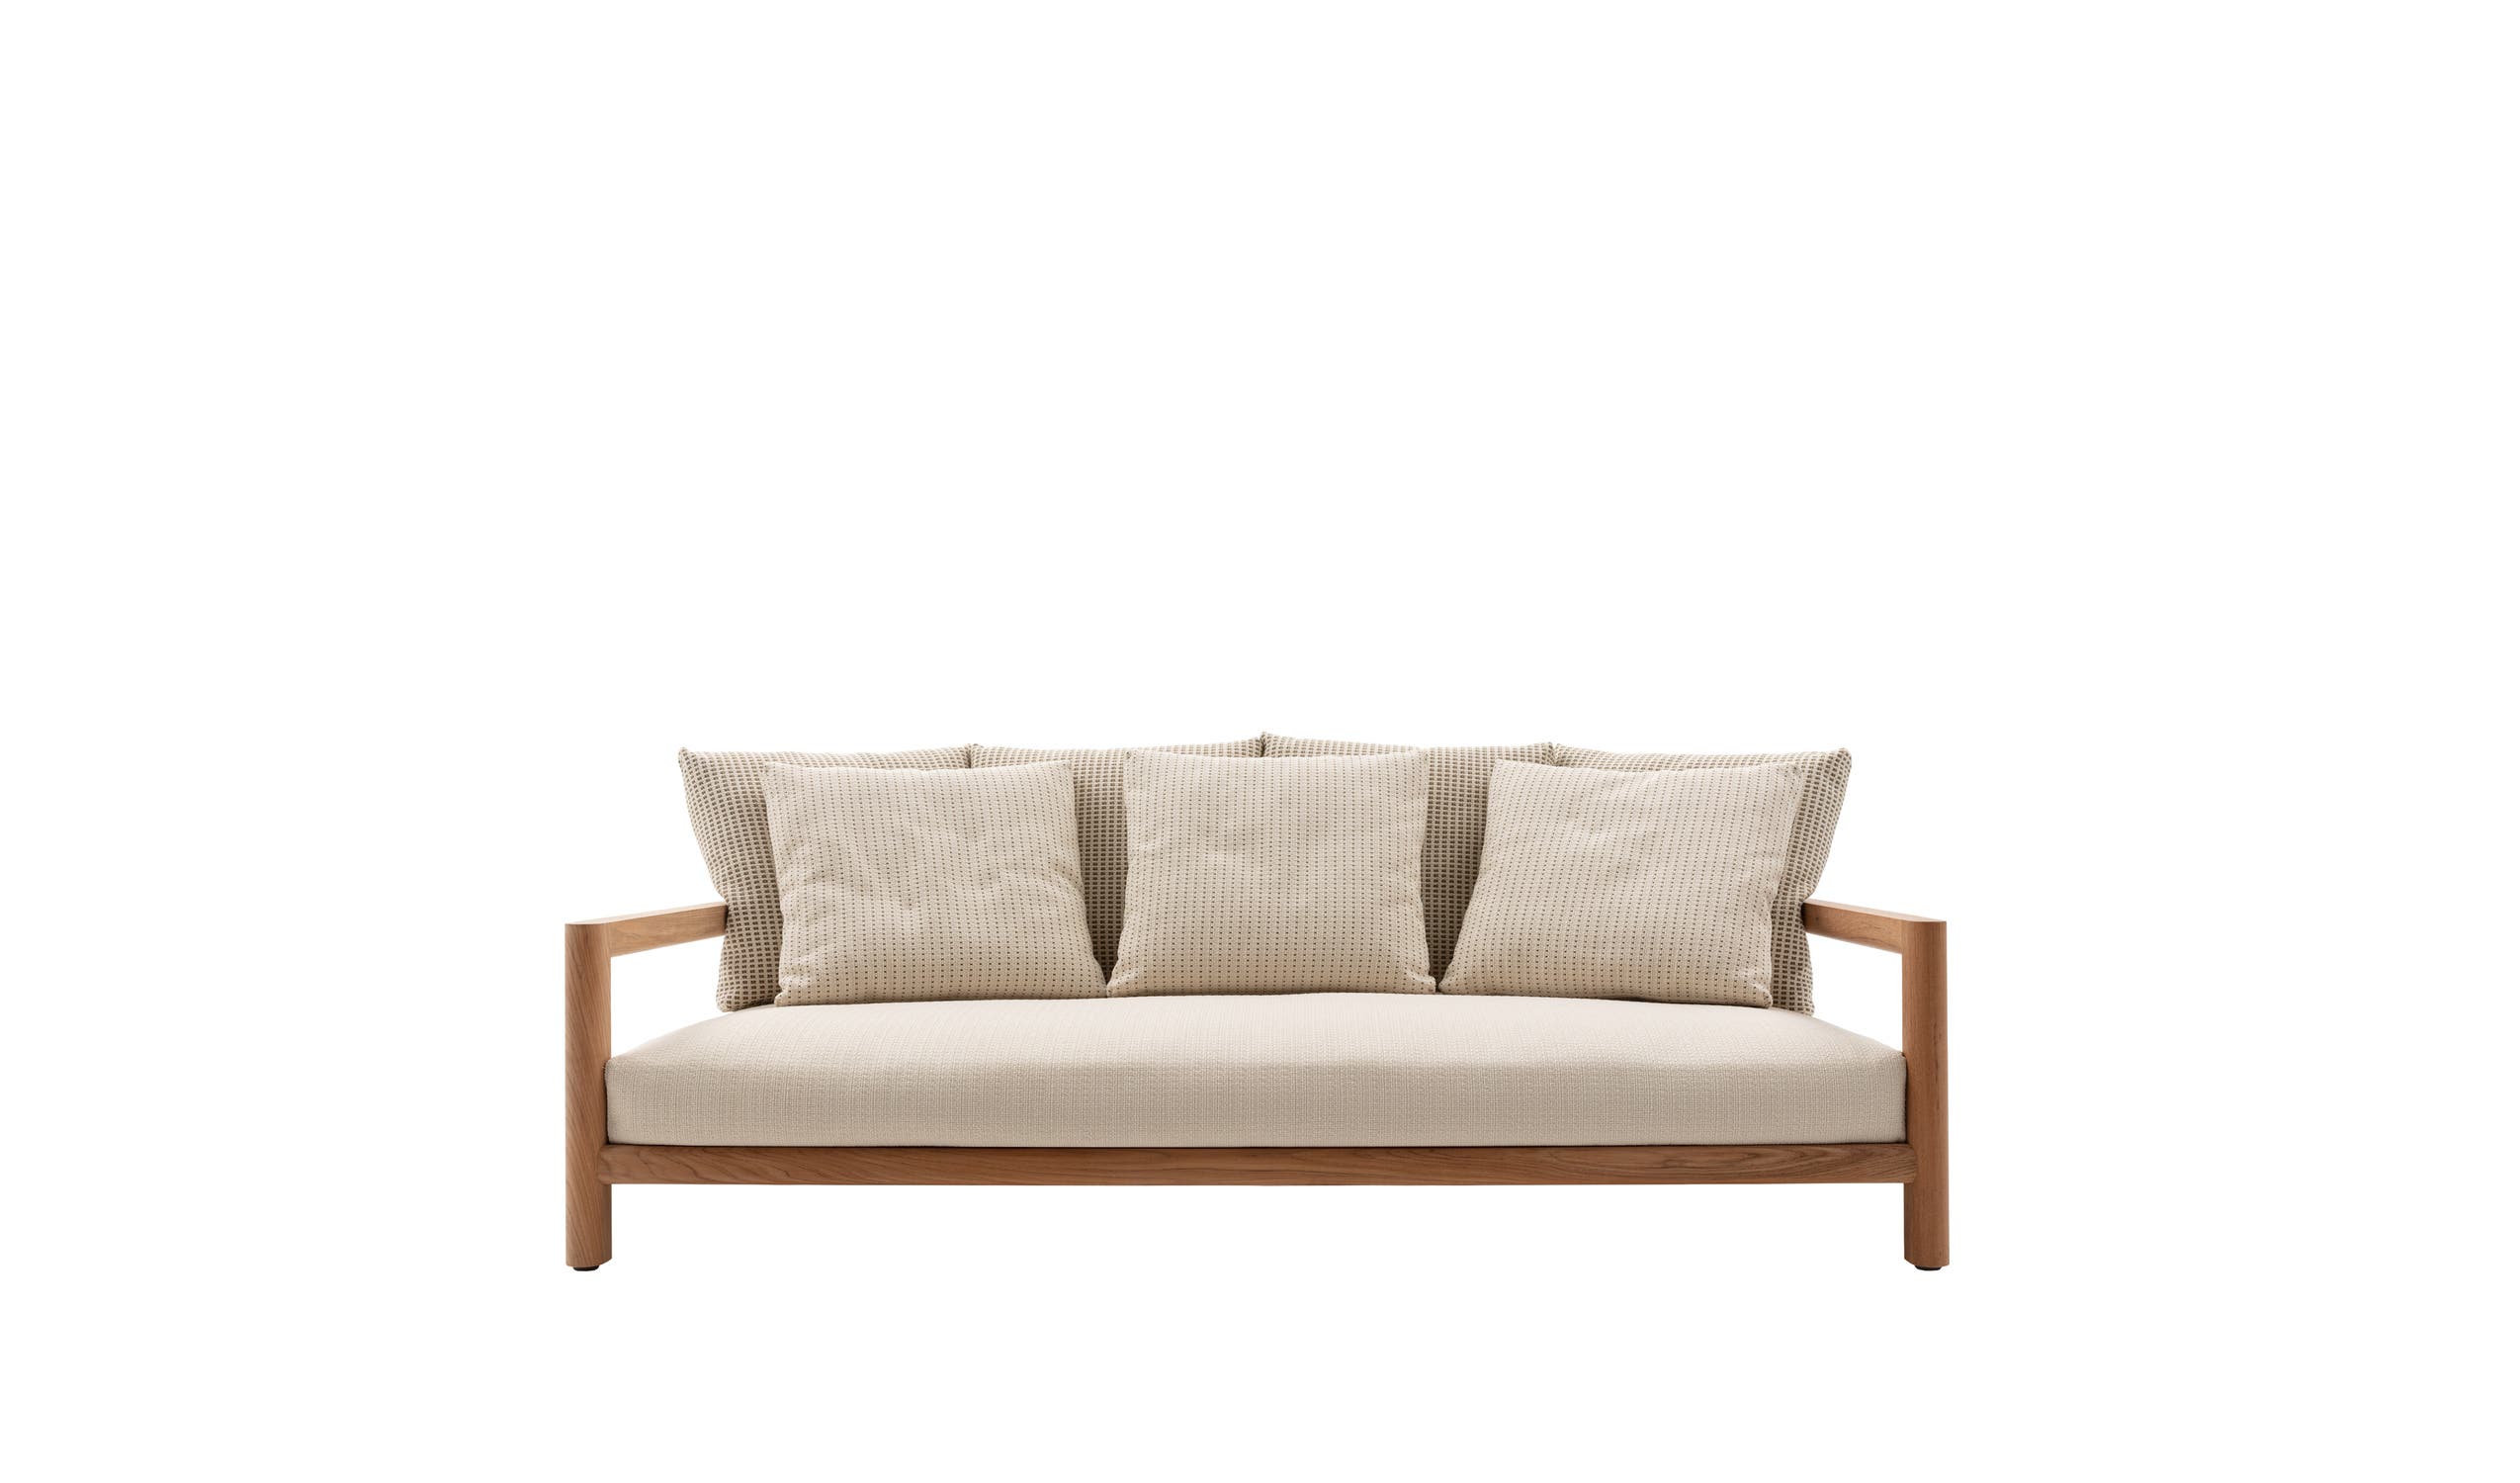 Modern designer italian sofas - Pablo Outdoor Sofas